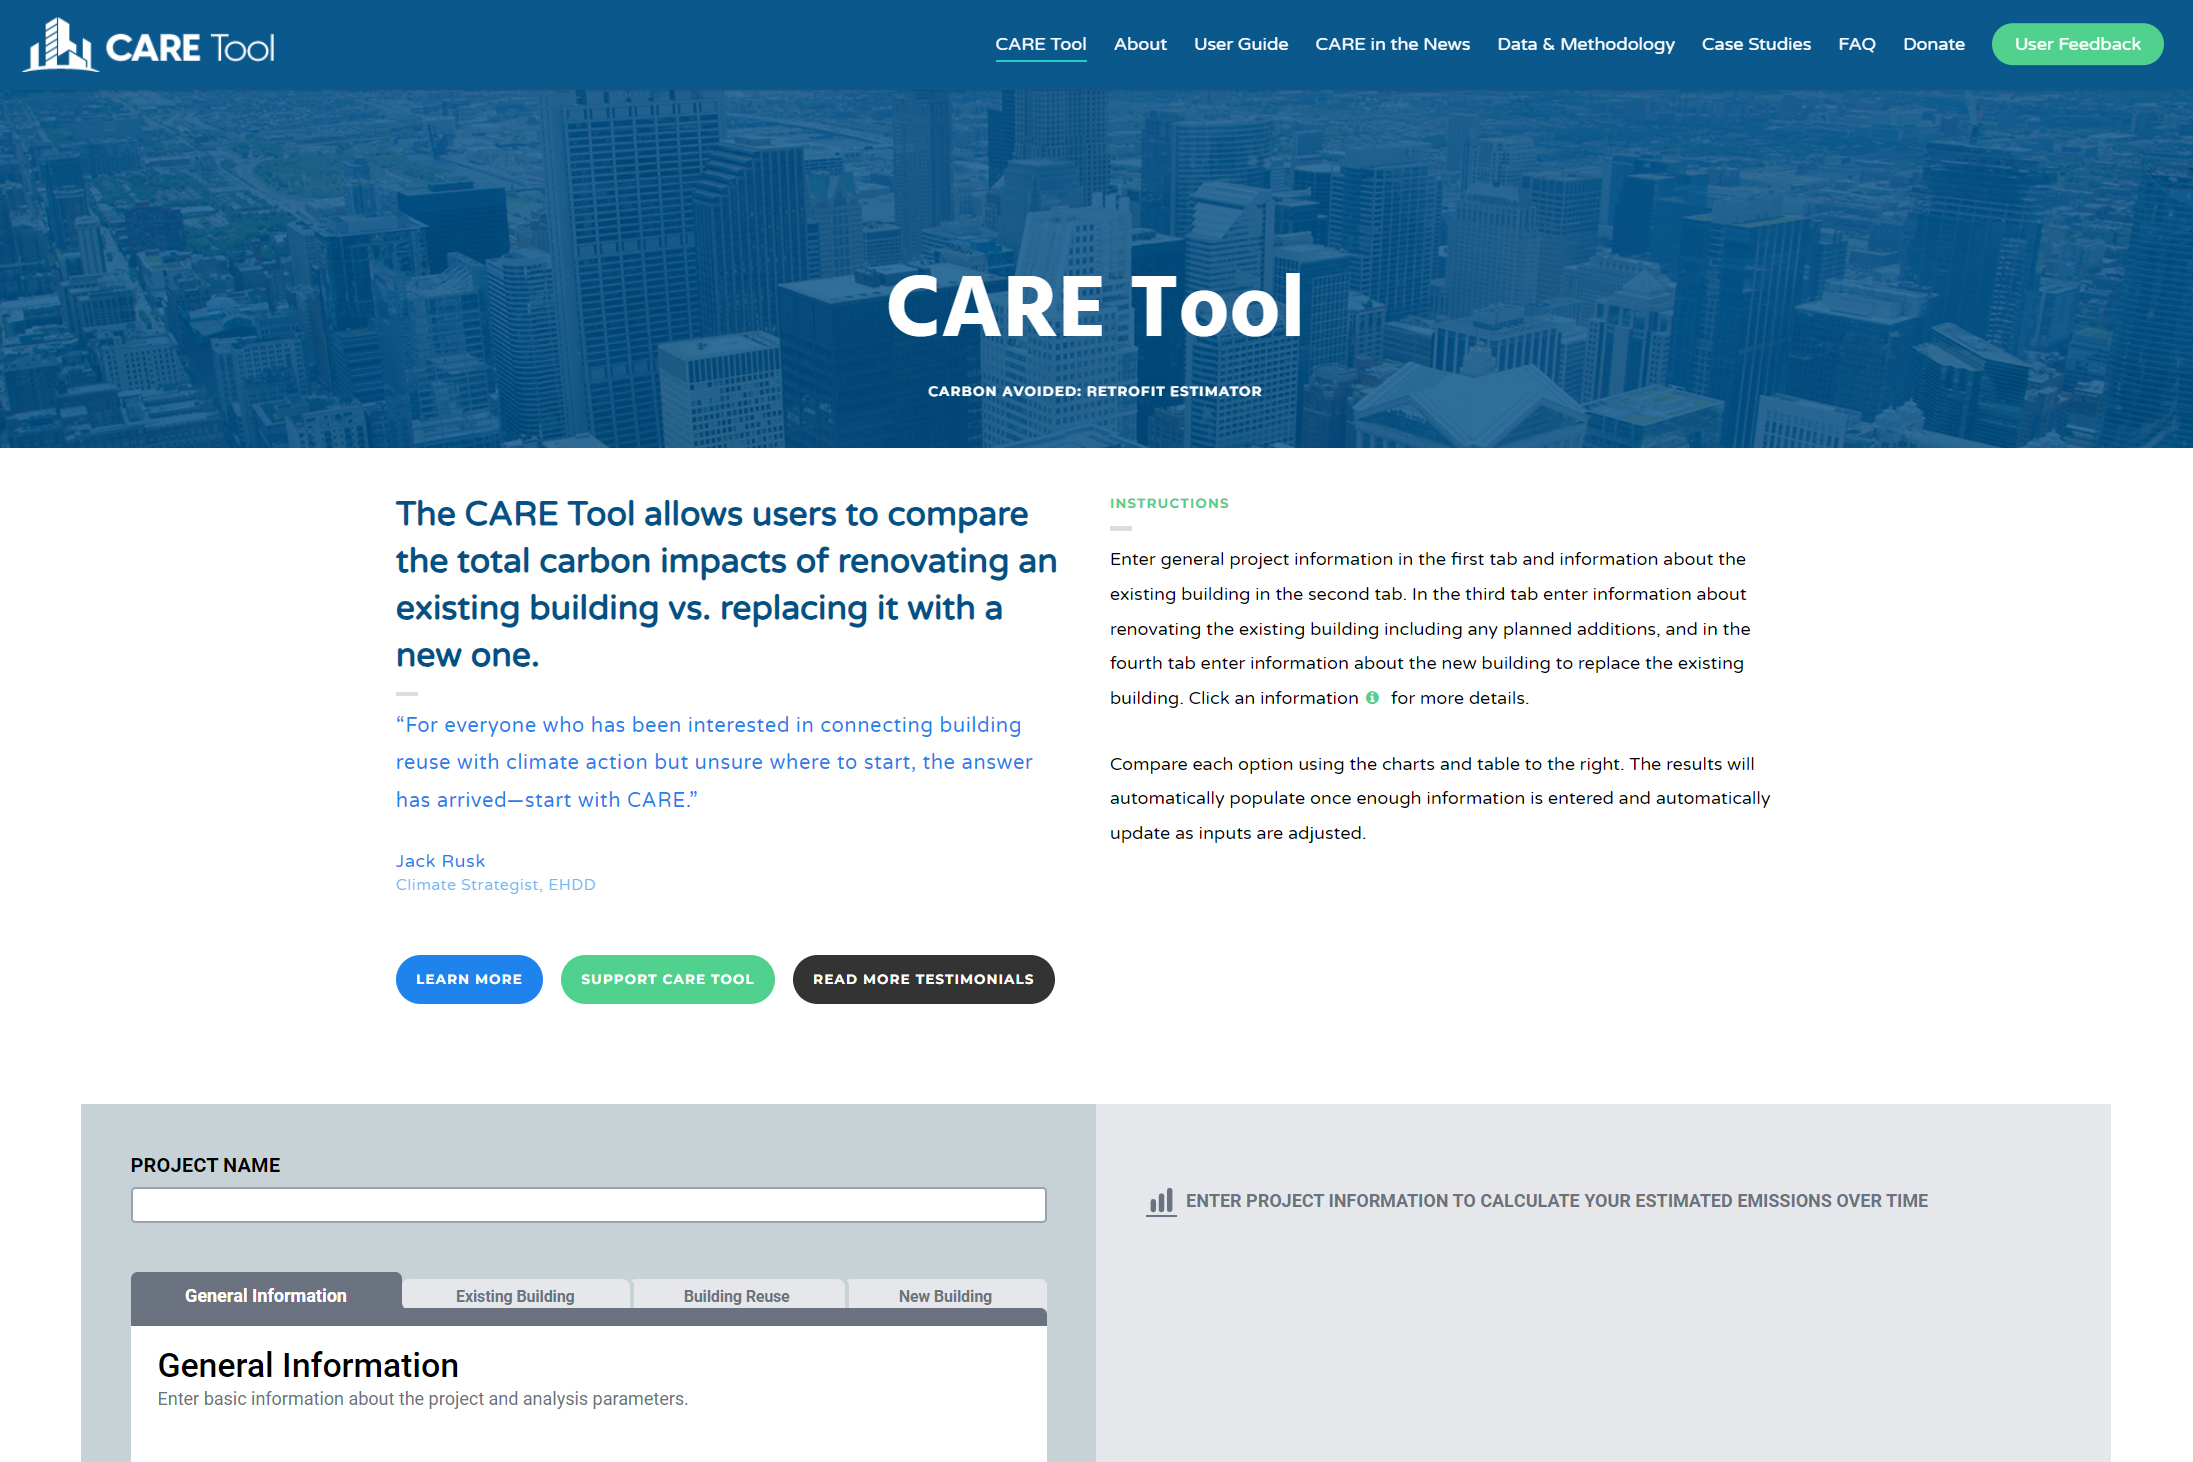 Screenshot of CARE Tool interface